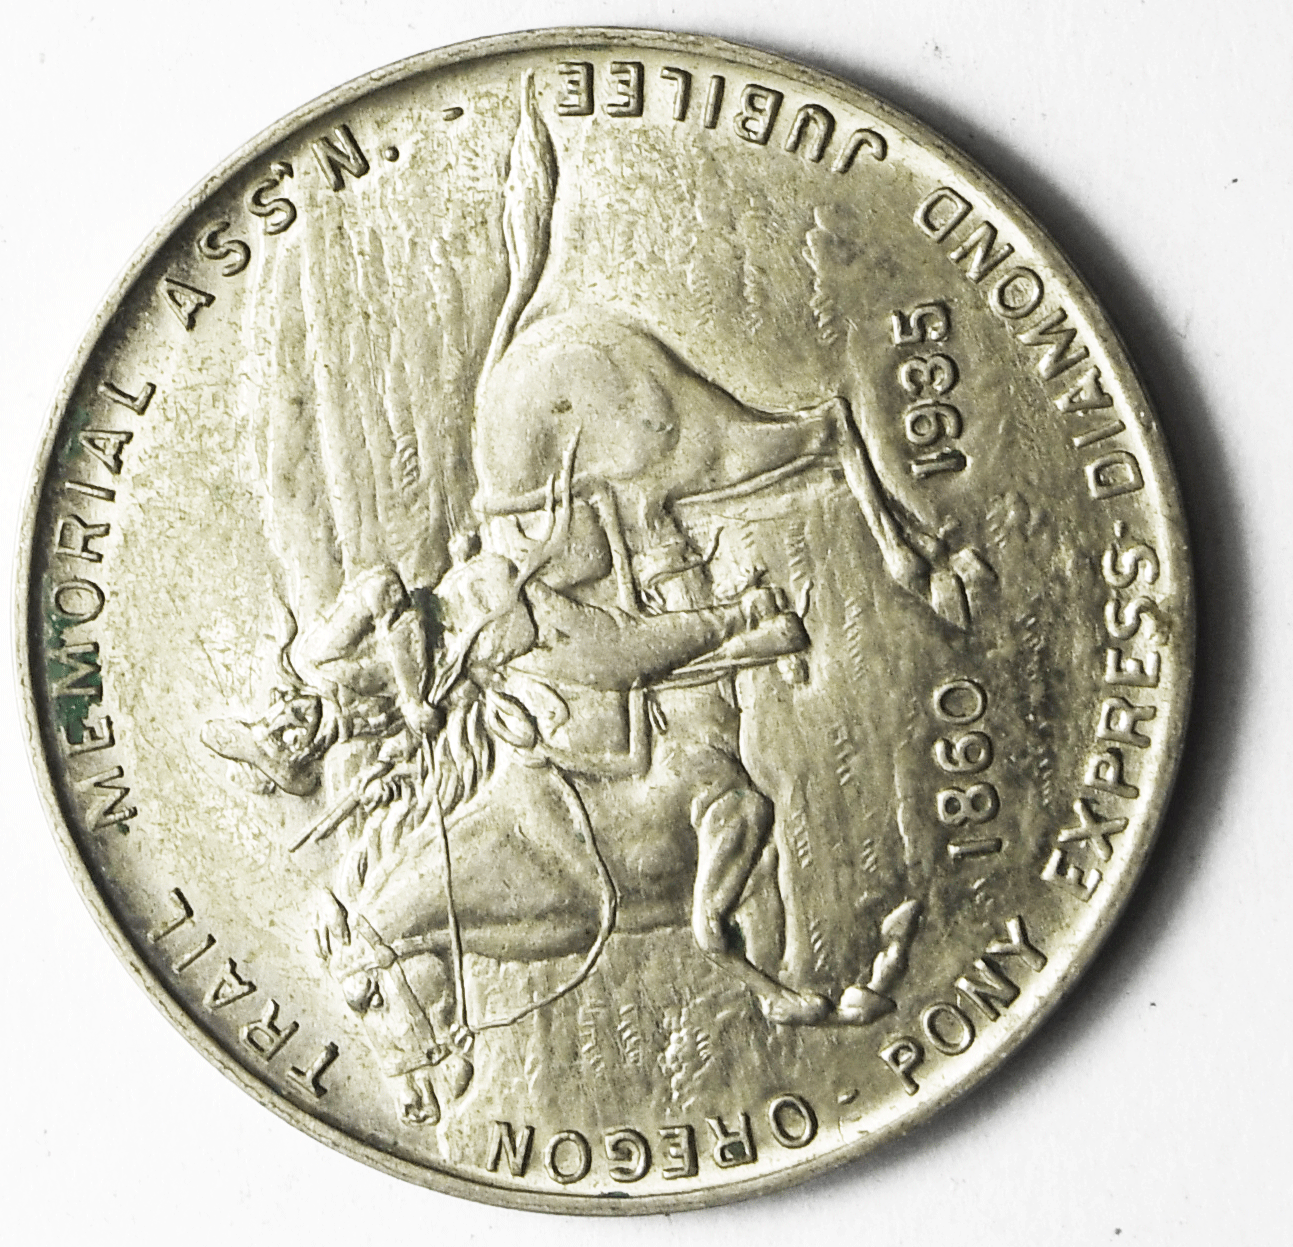 1935 Whitehead Hoag Pony Express Diamond Jubilee Relay Station Medal 32mm